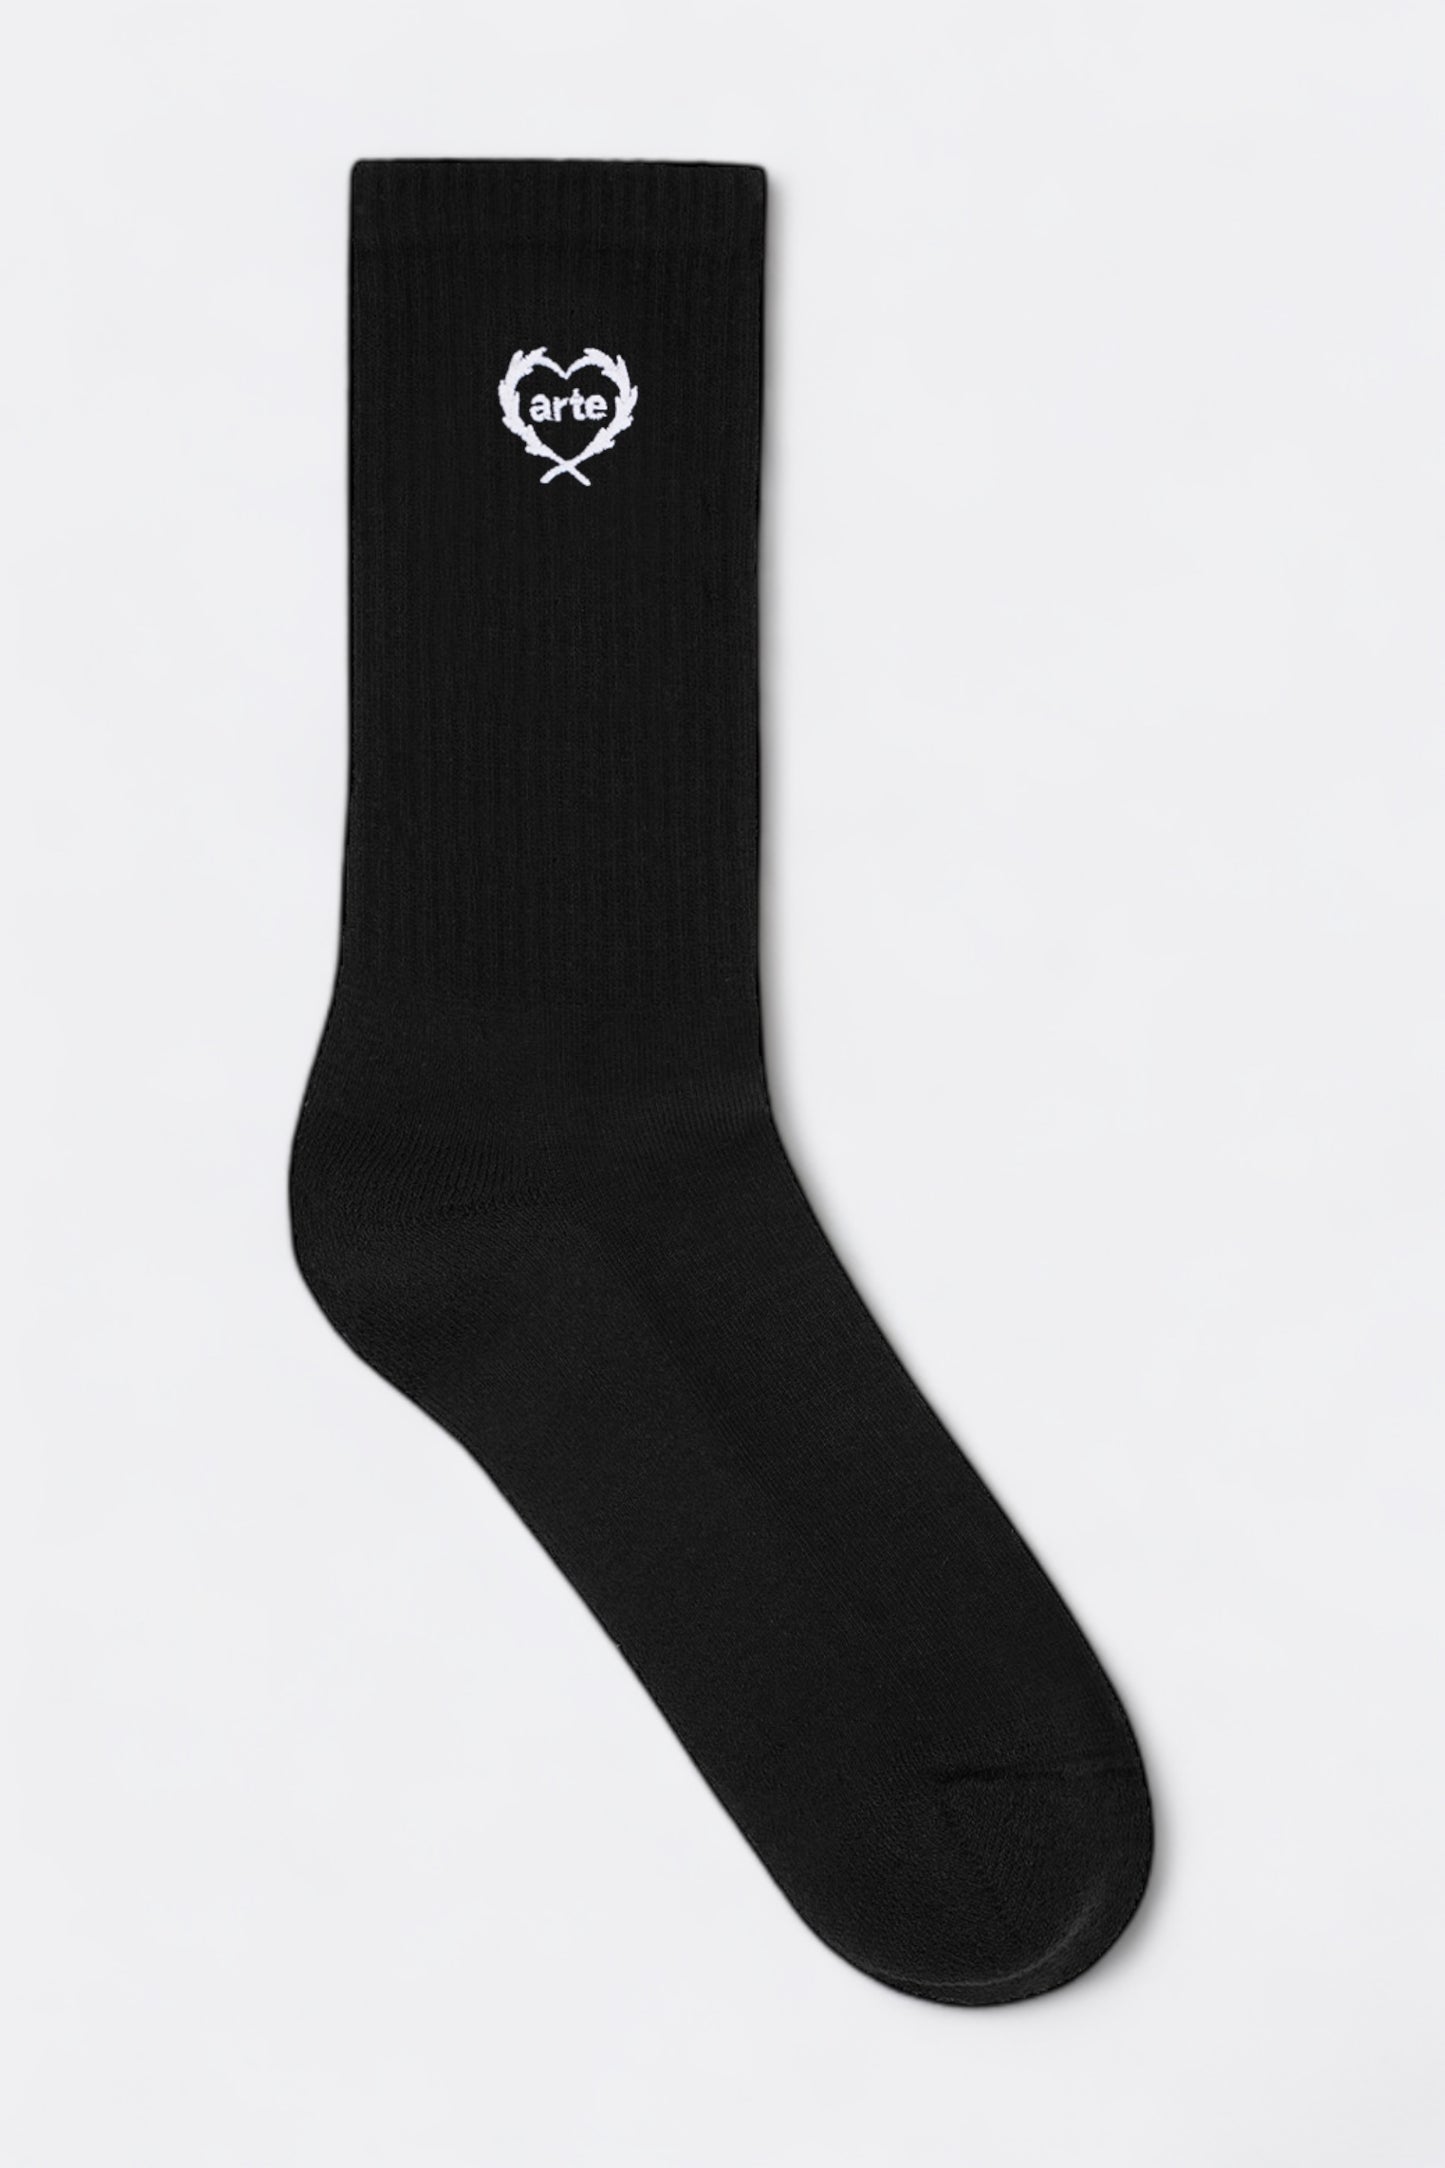 Arte - Arte Small Heart Socks (Black)